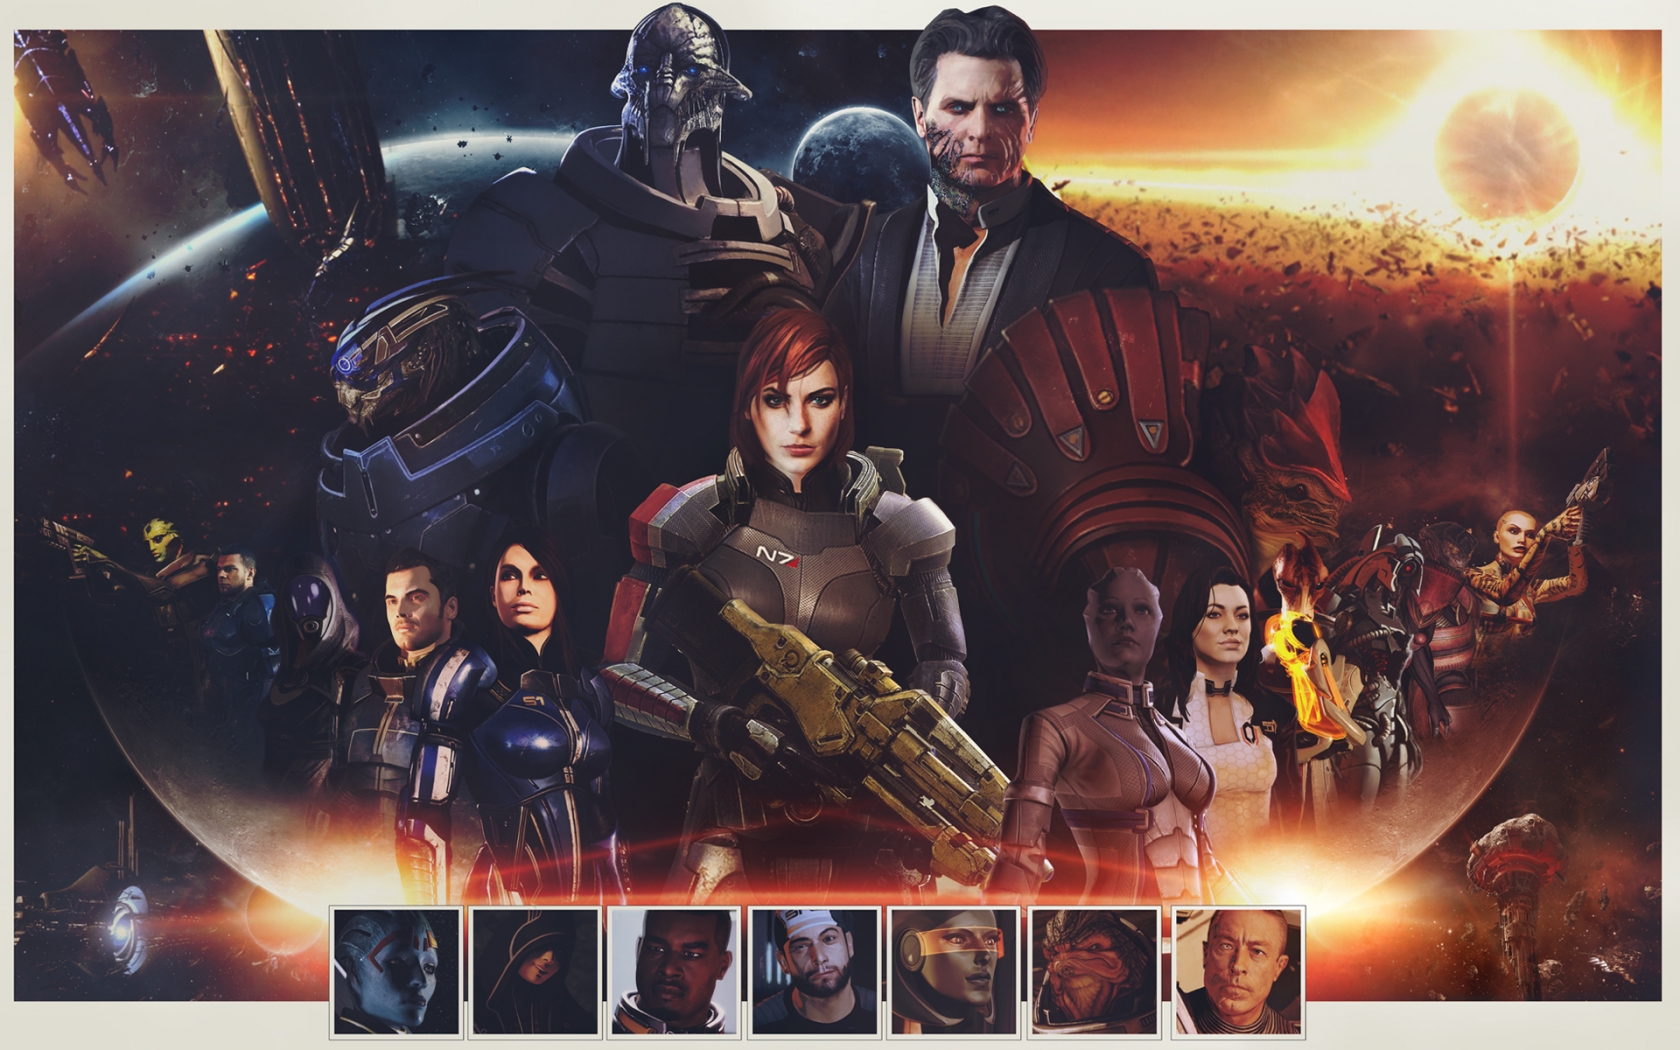 Mass Effect Zaeed Massani for 1680 x 1050 widescreen resolution